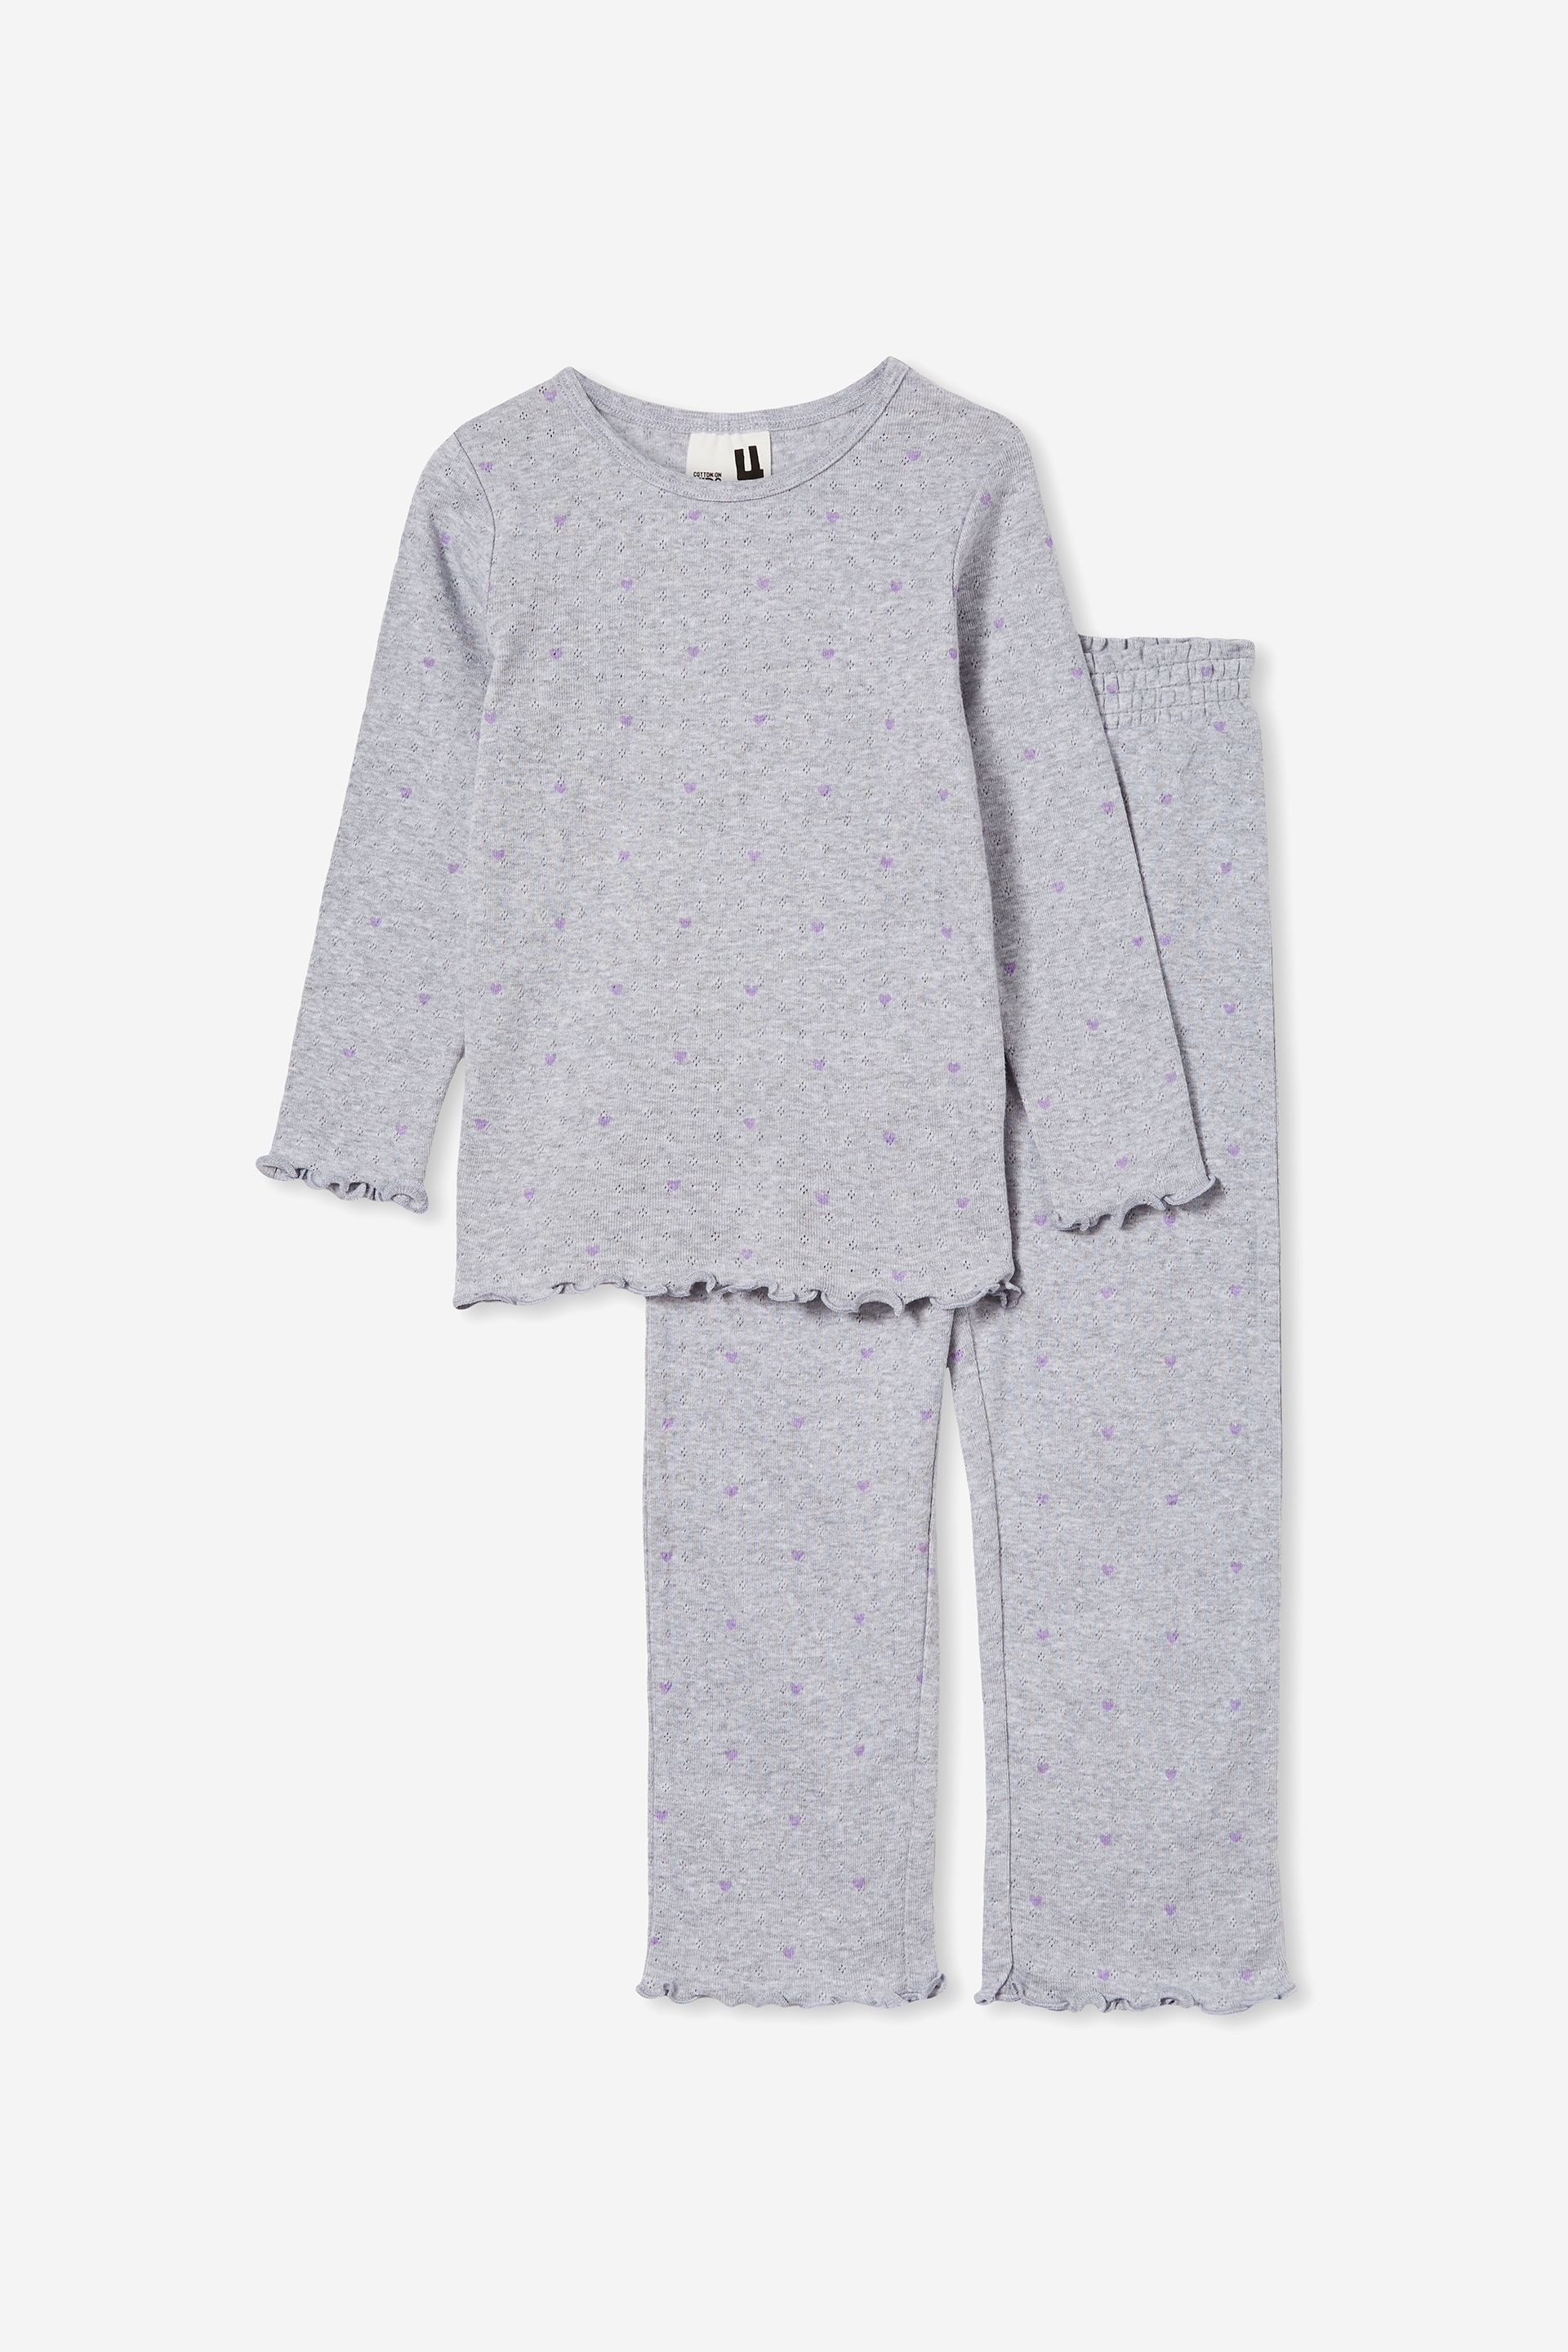 Cotton On Kids - Camilla Long Sleeve Pyjama Set - Light grey marle/little hearts